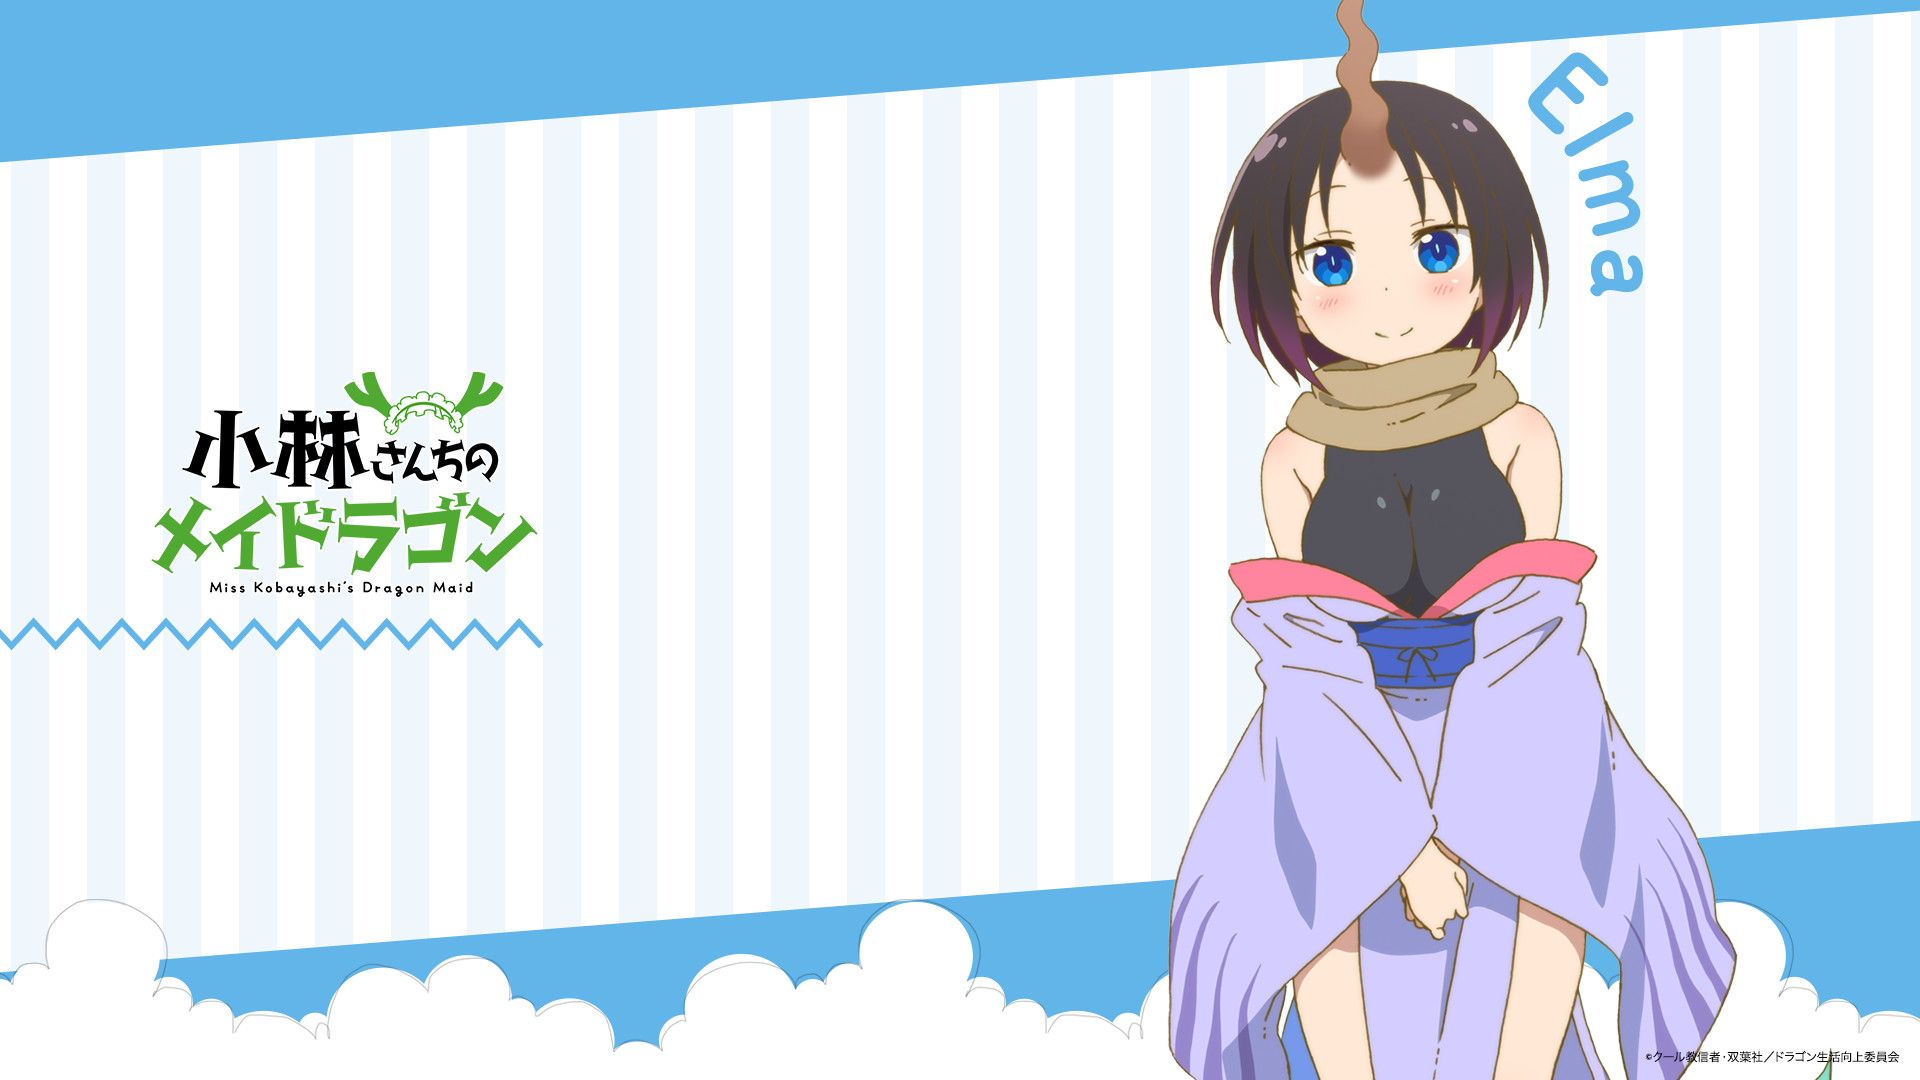 Download Miss Kobayashi S Dragon Maid Wallpaper Hd Backgrounds Download Itl Cat - miss kobayashi's dragon maid kanna roblox